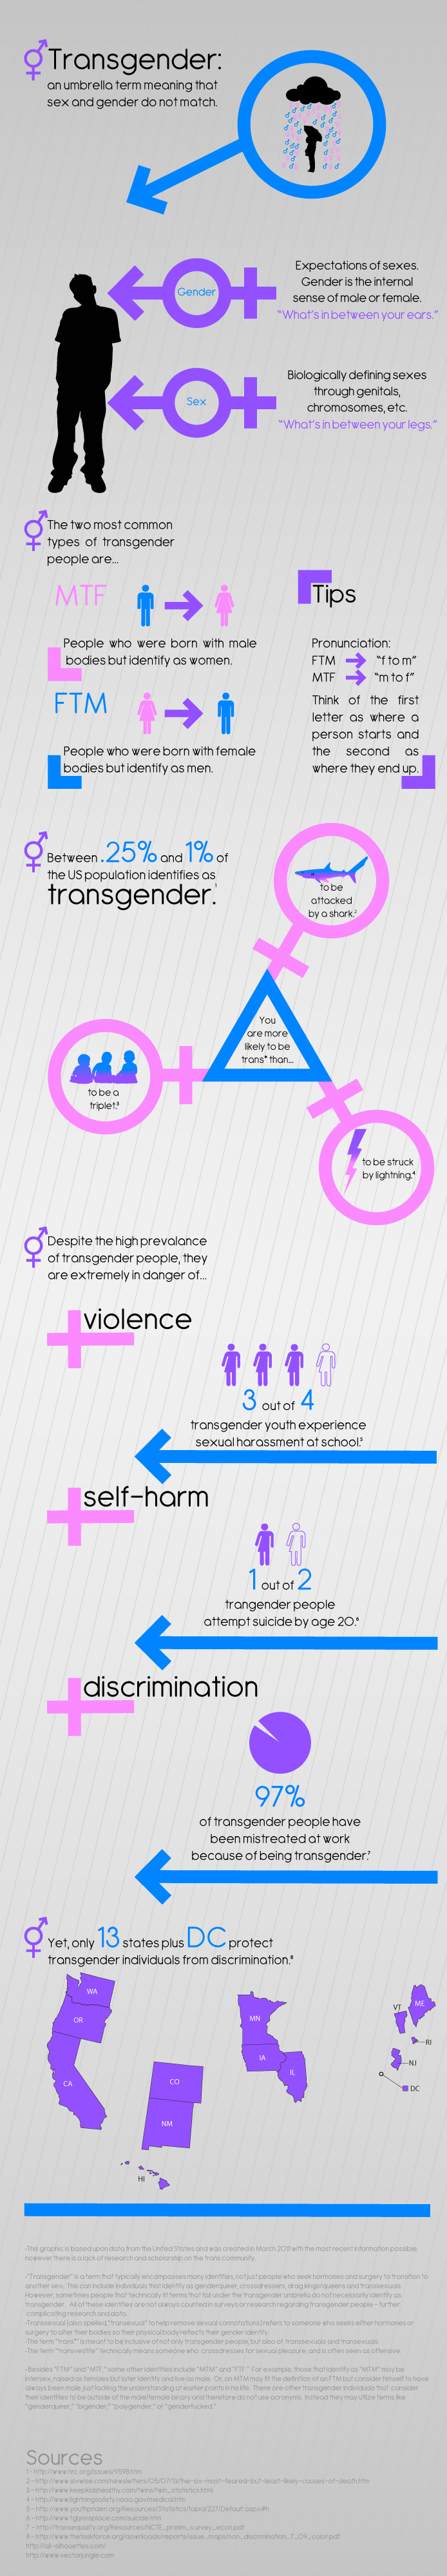 Image of transgender Infographic